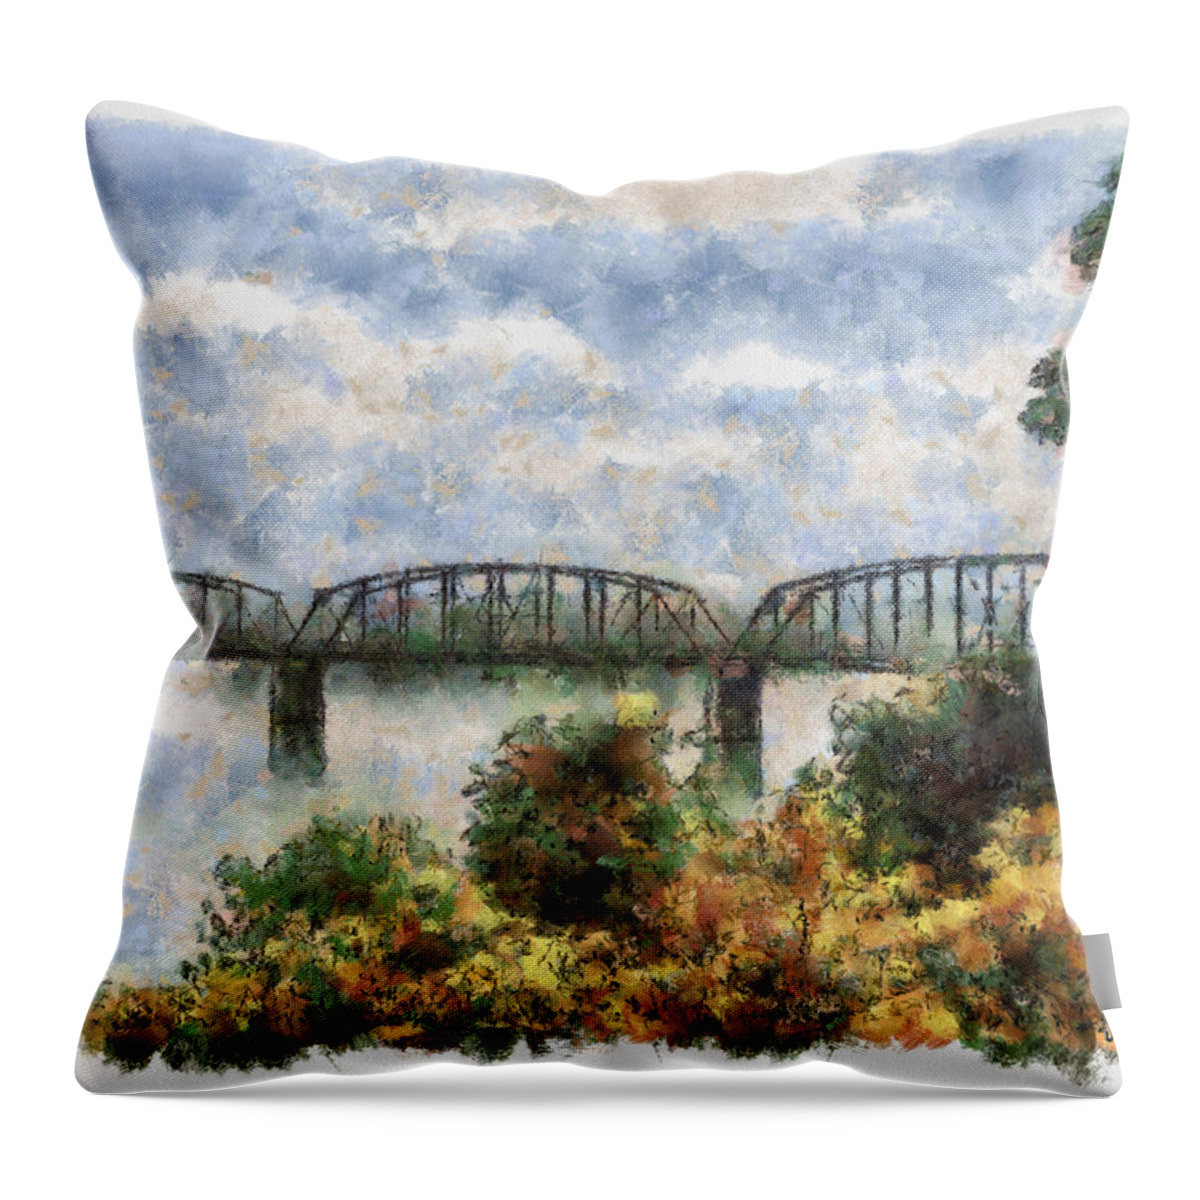 Strang Throw Pillow featuring the painting Strang Bridge by Jeffrey Kolker